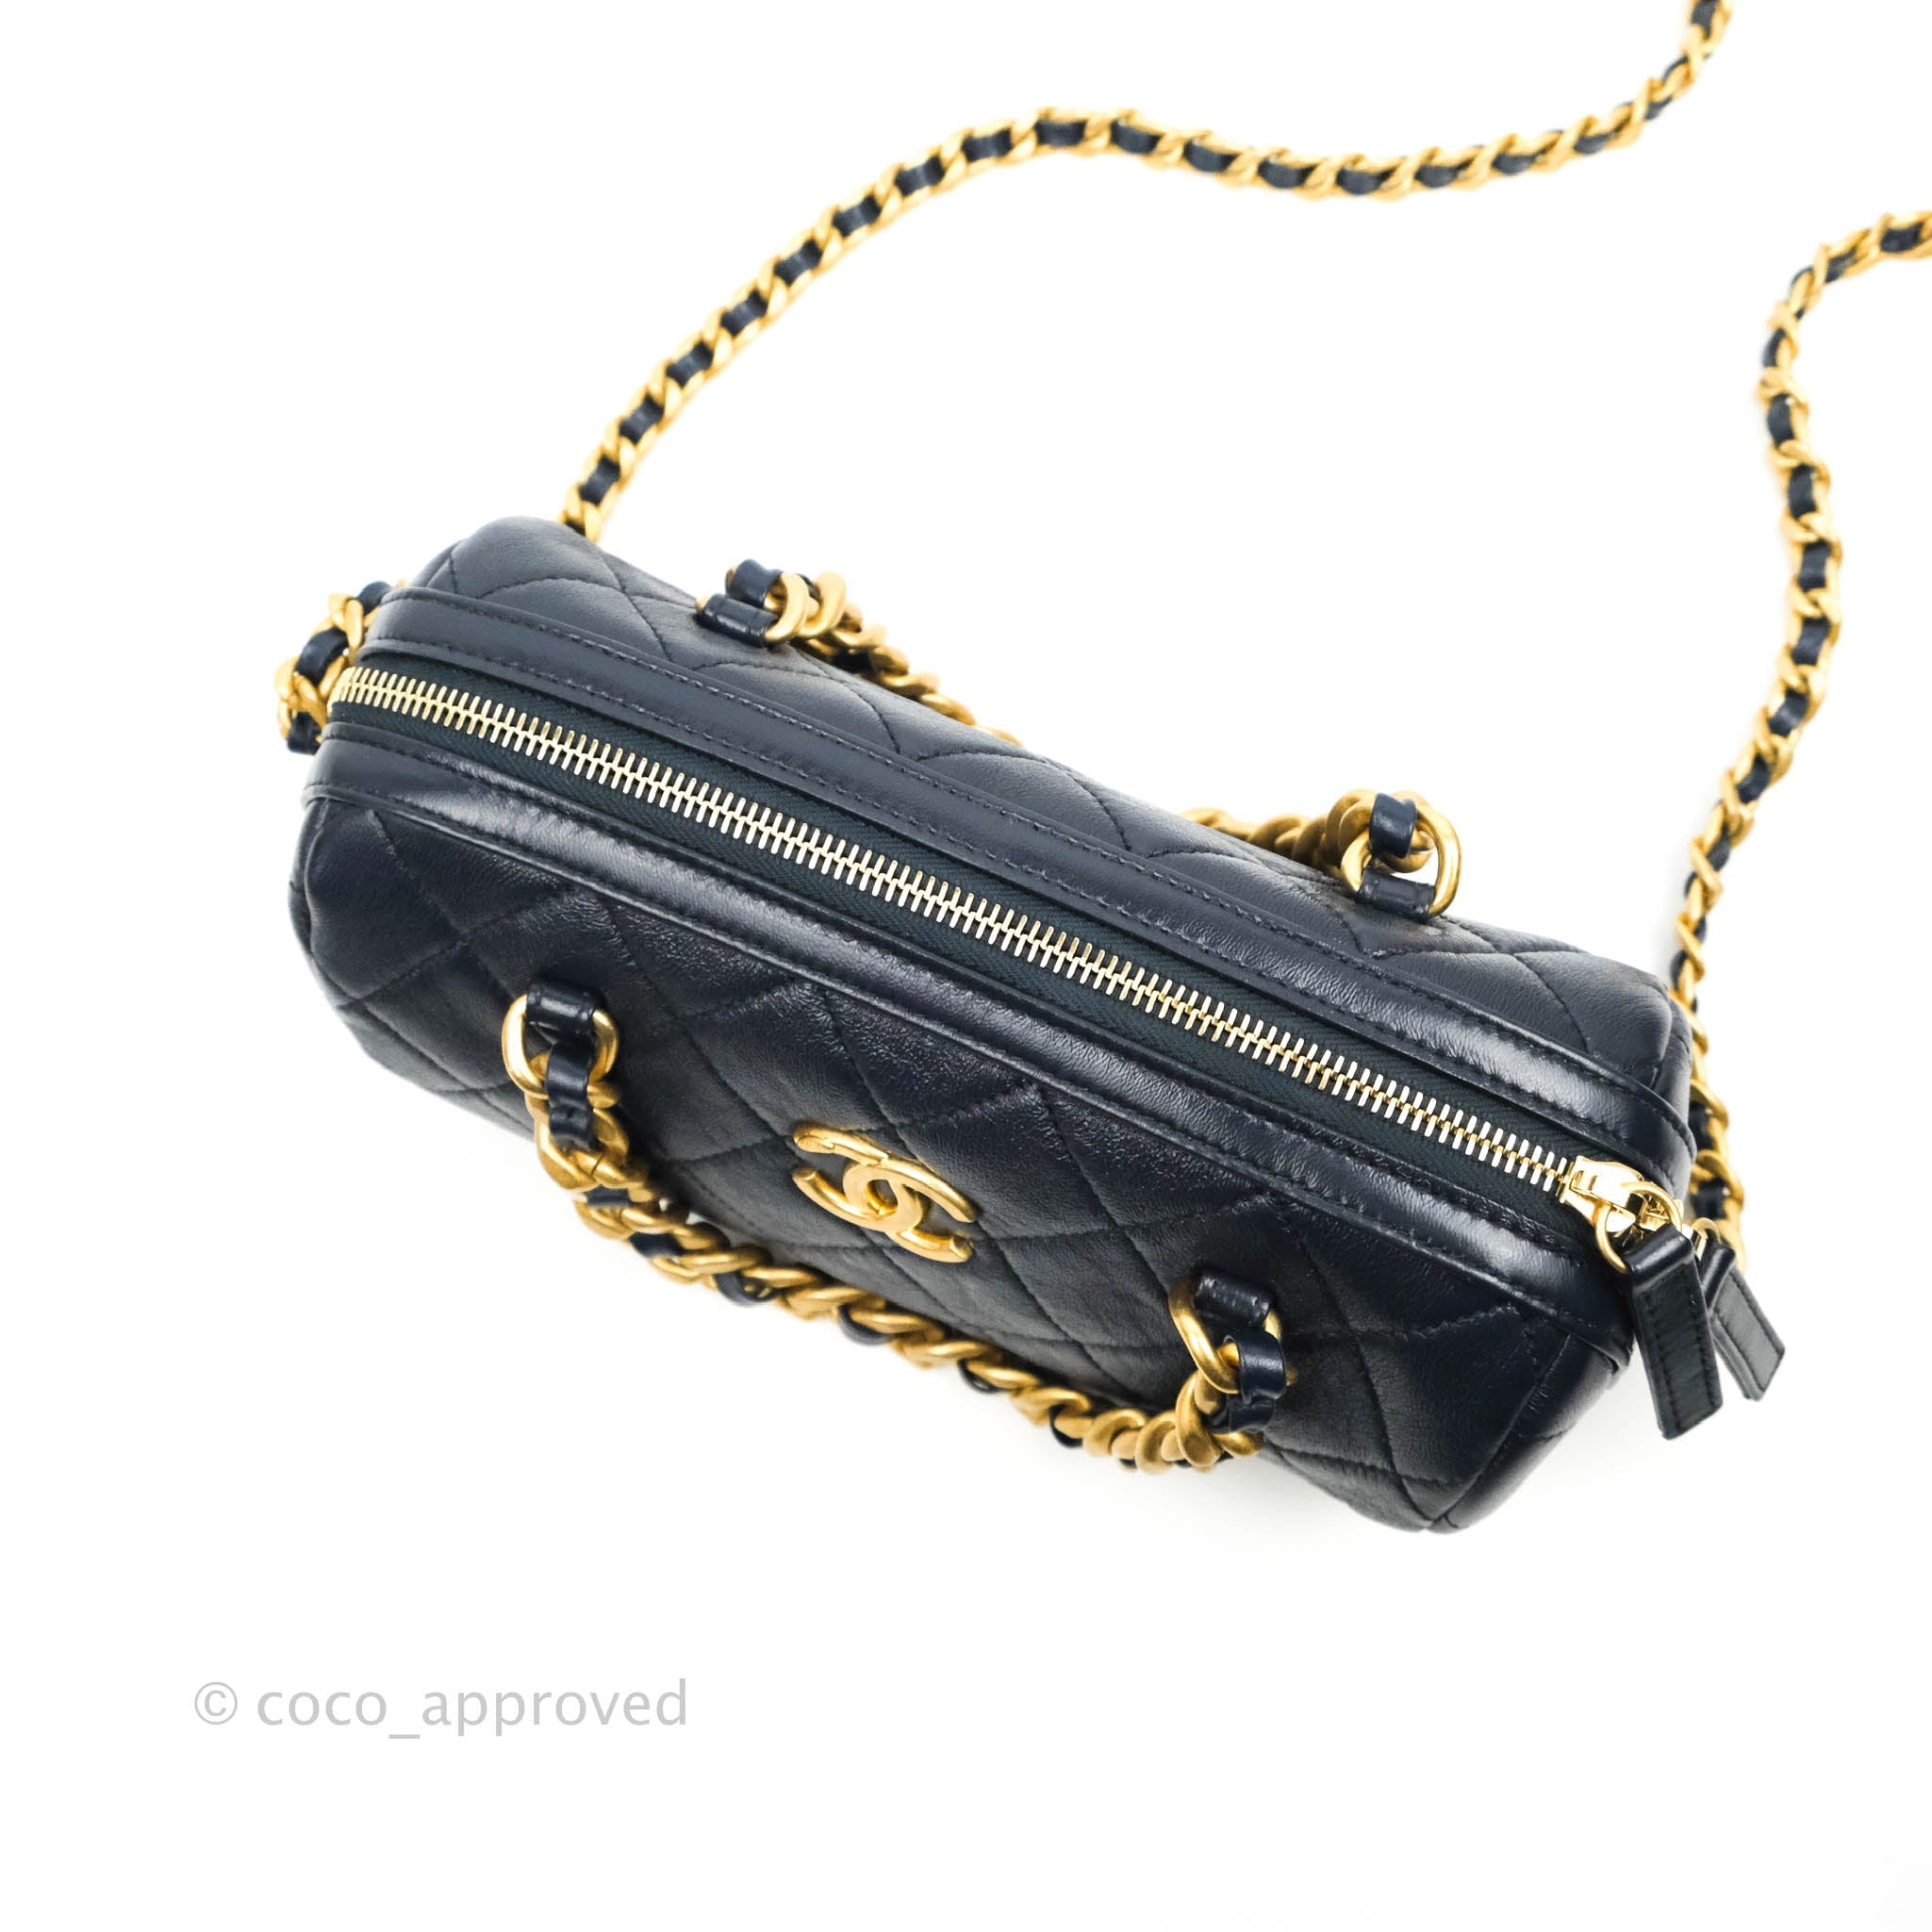 Chanel Yellow Jumbo Handbag – RCR Luxury Boutique